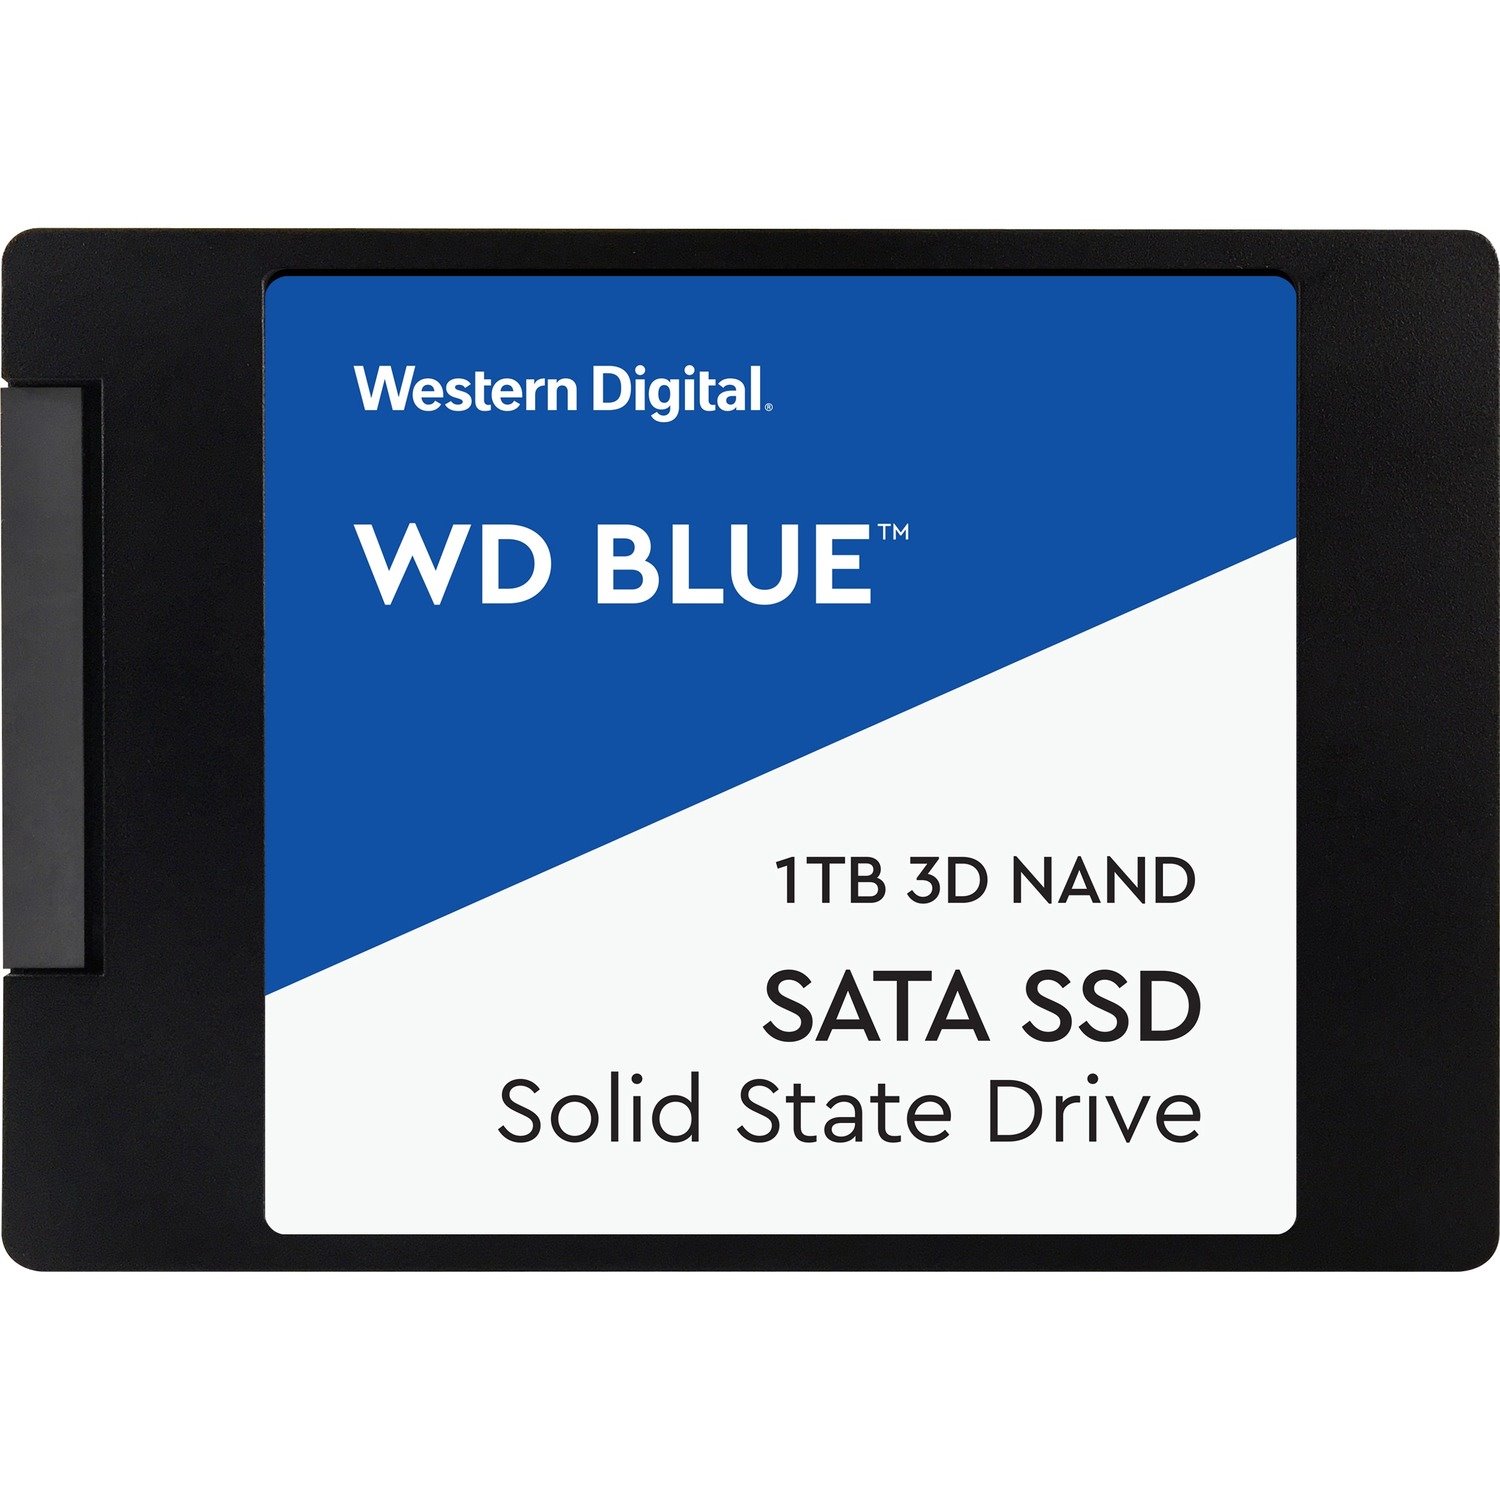 Solid State Drive WD Blue 3D NAND - 1TB PC SSD - SATA III - 6 Gb/s 2.5"/7mm 